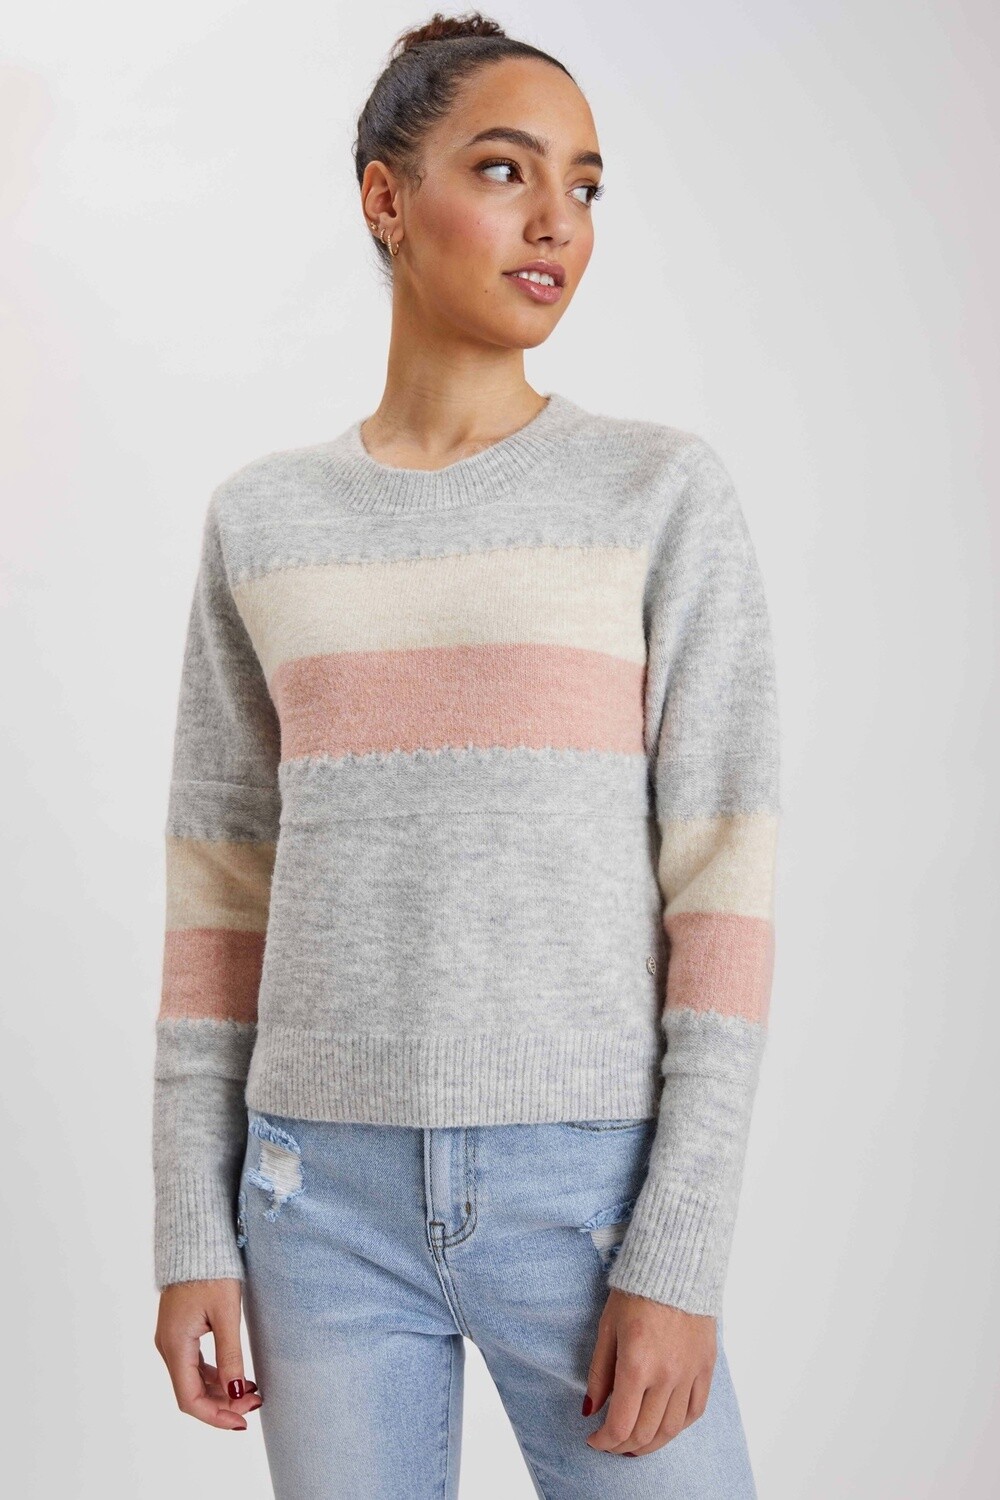 Grey/Rose Striped Sweater